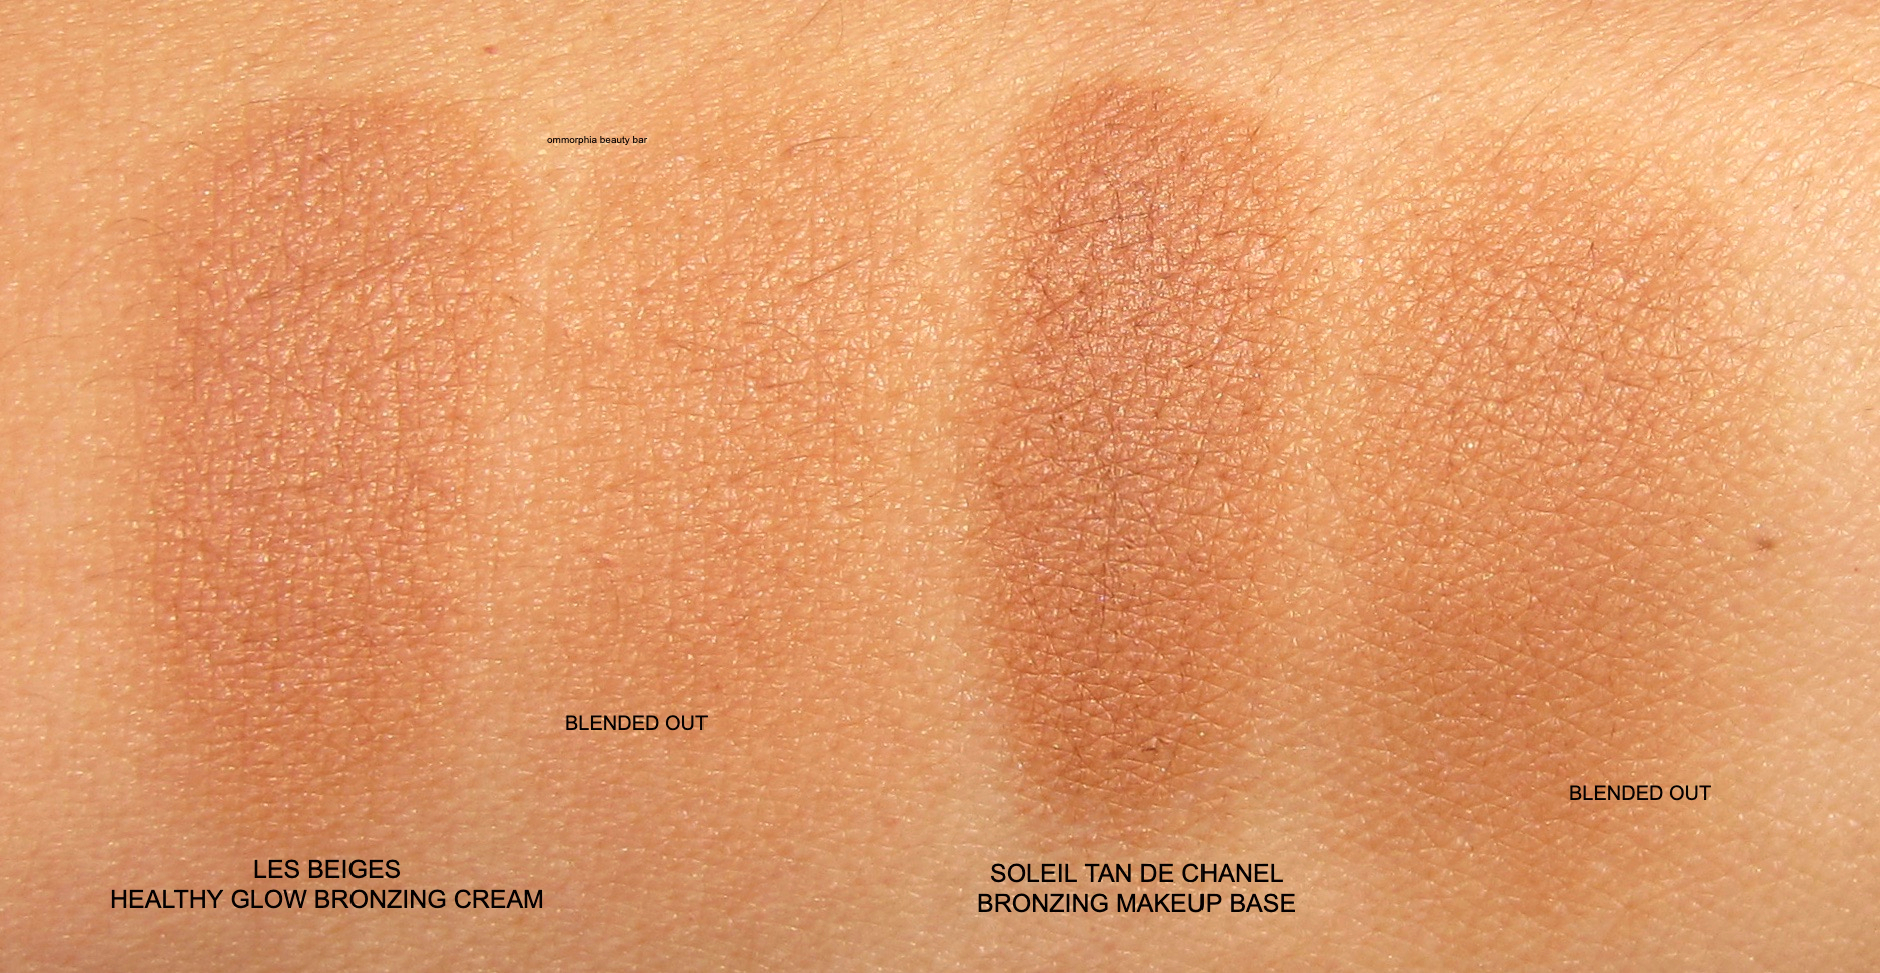 CHANEL · Les Beiges Healthy Glow Bronzing Cream | ommorphia beauty bar